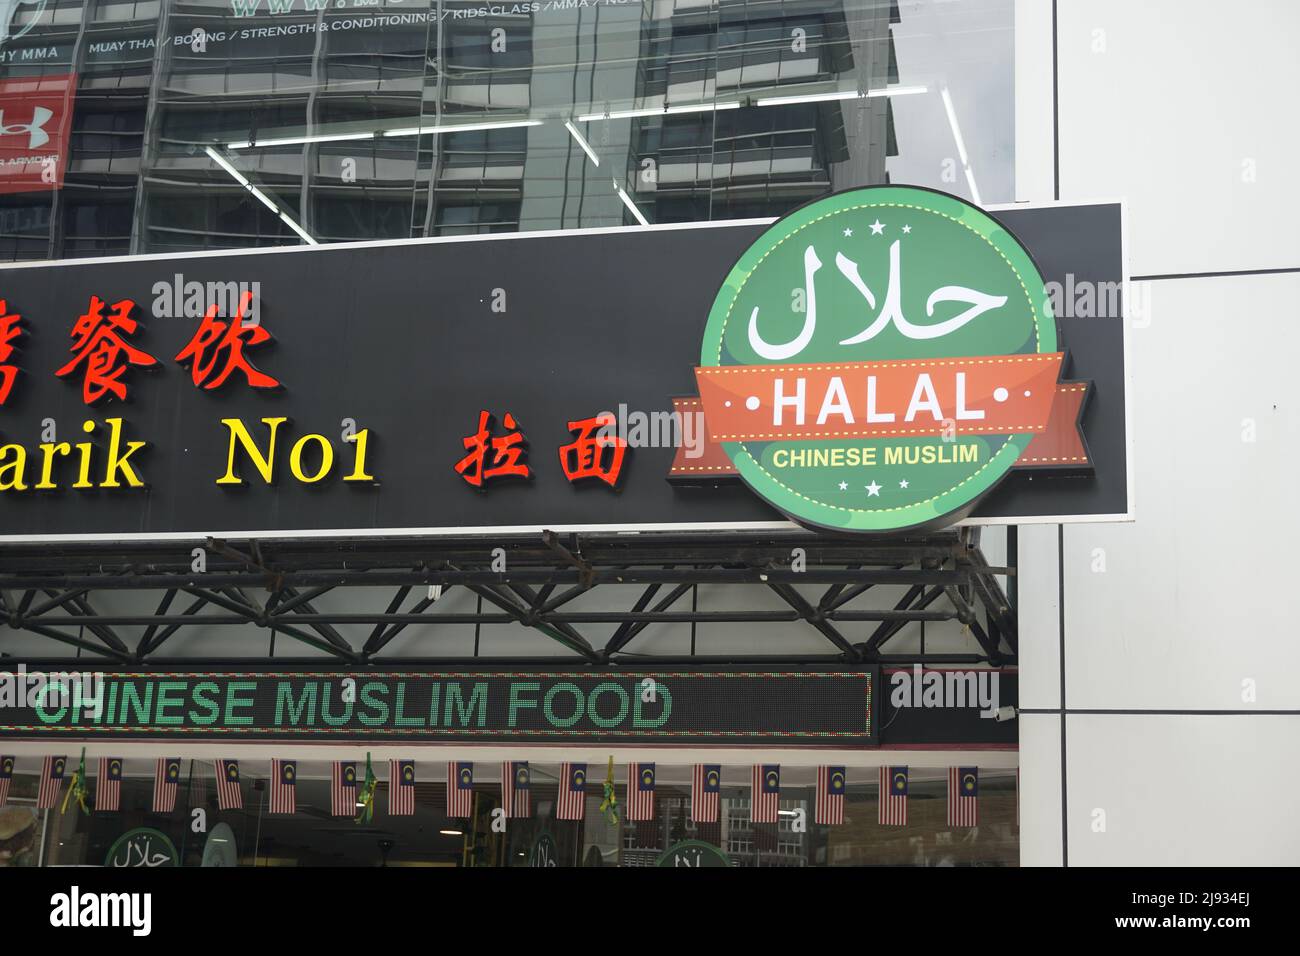 Halal Chinese Muslim restaurant in Kuala Lumpur, Malaysia Stock Photo